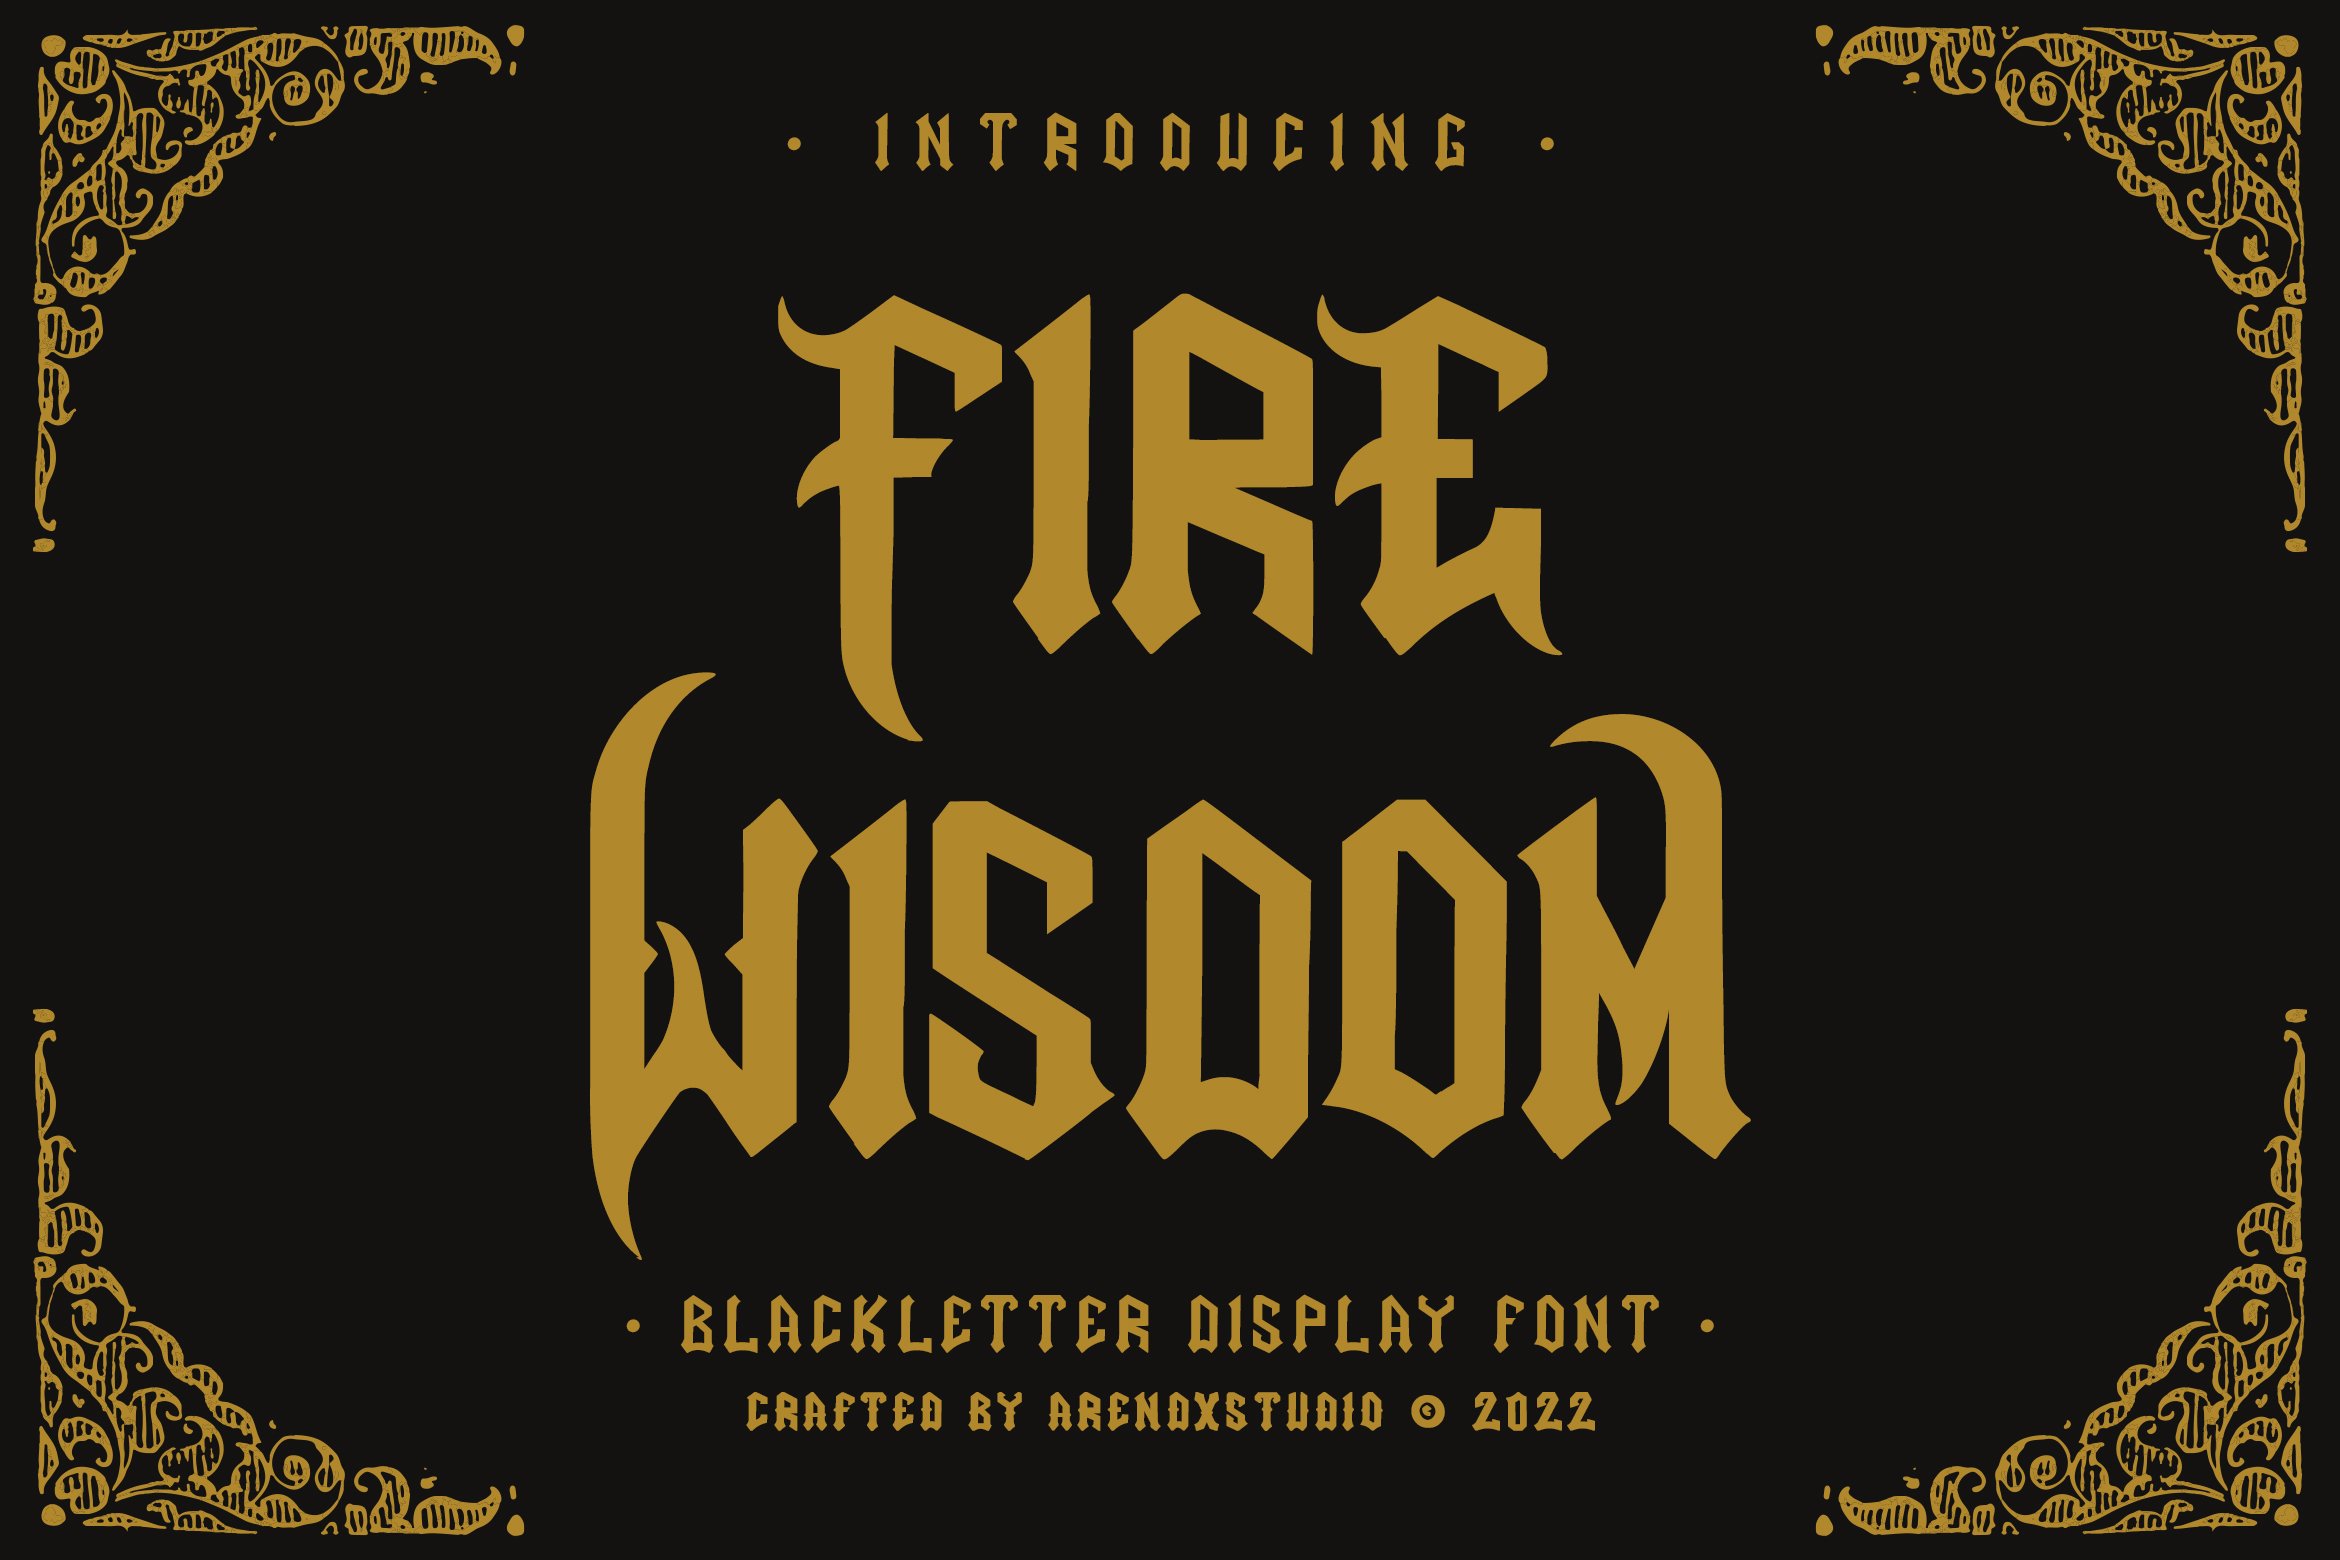 Fire Wisdom - Blackletter Font cover image.